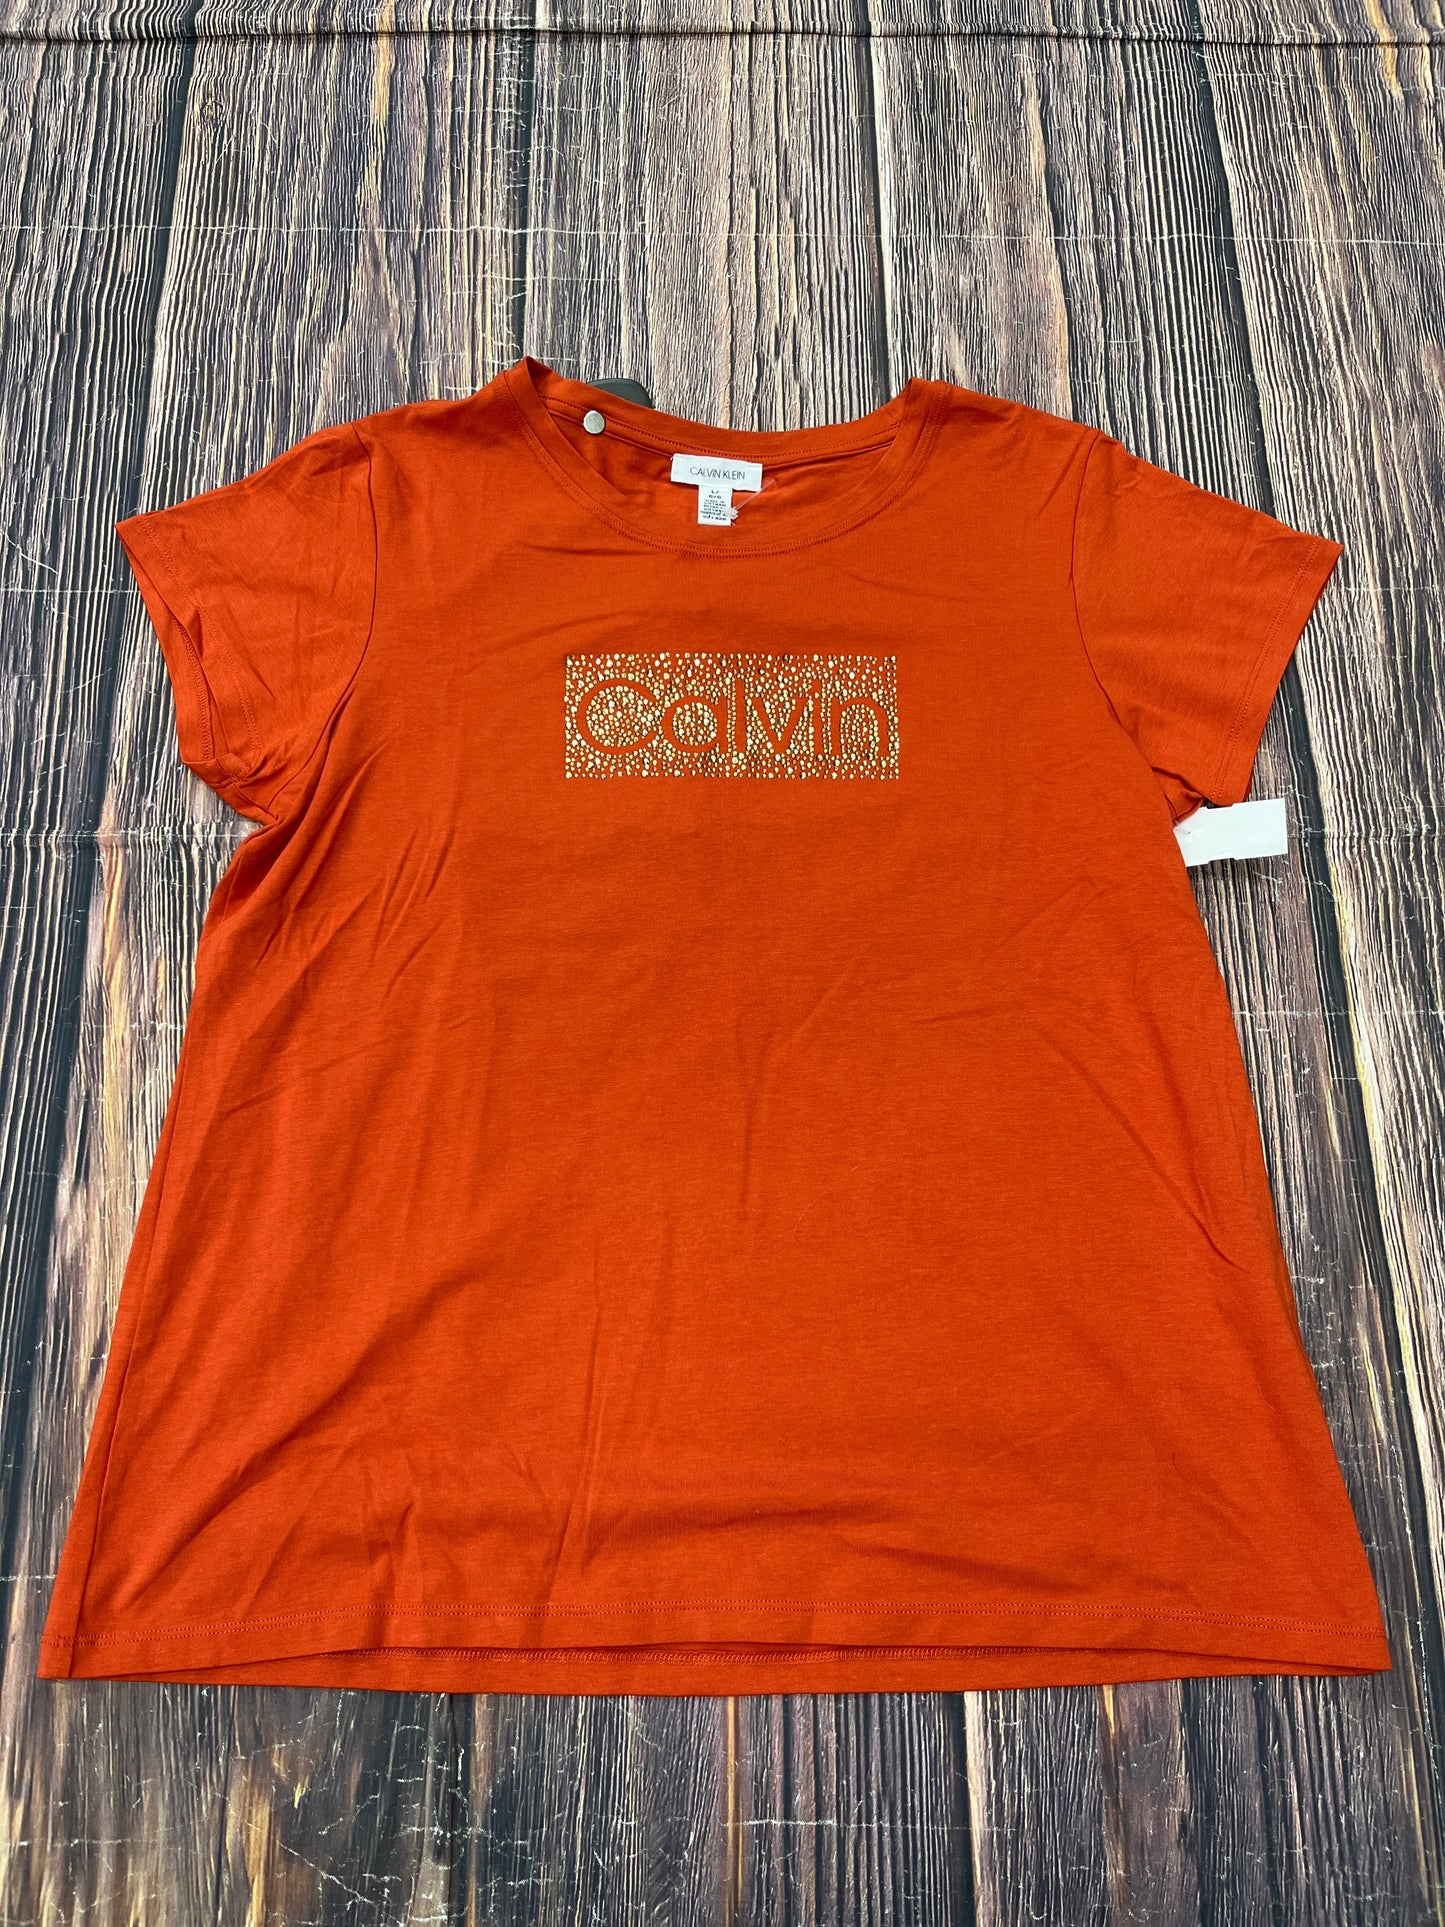 Orange Top Short Sleeve Calvin Klein, Size L